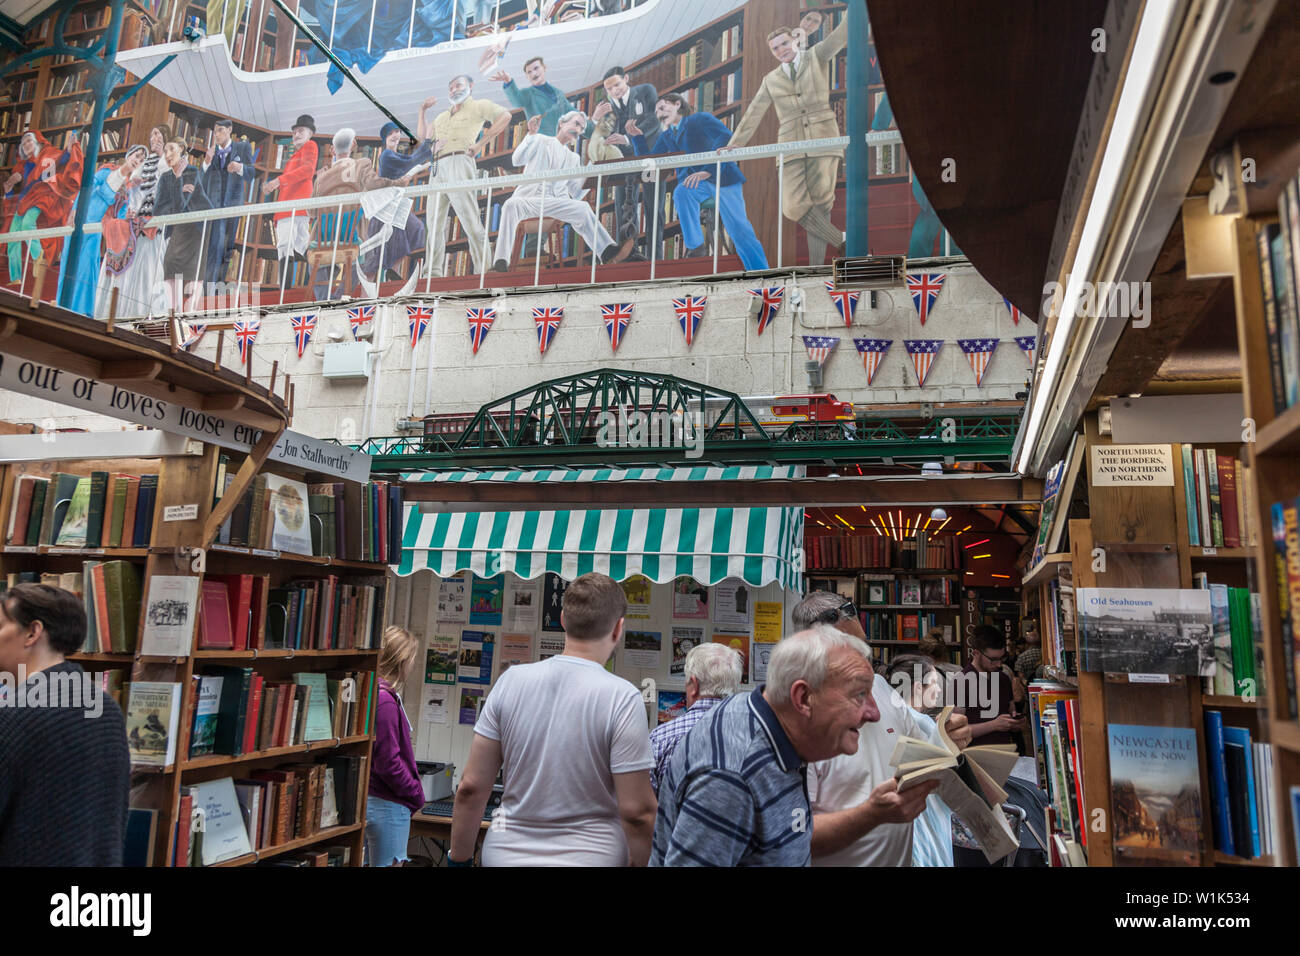 The Barter Books library at Alnwick,Northumberland,England,UK Stock Photo